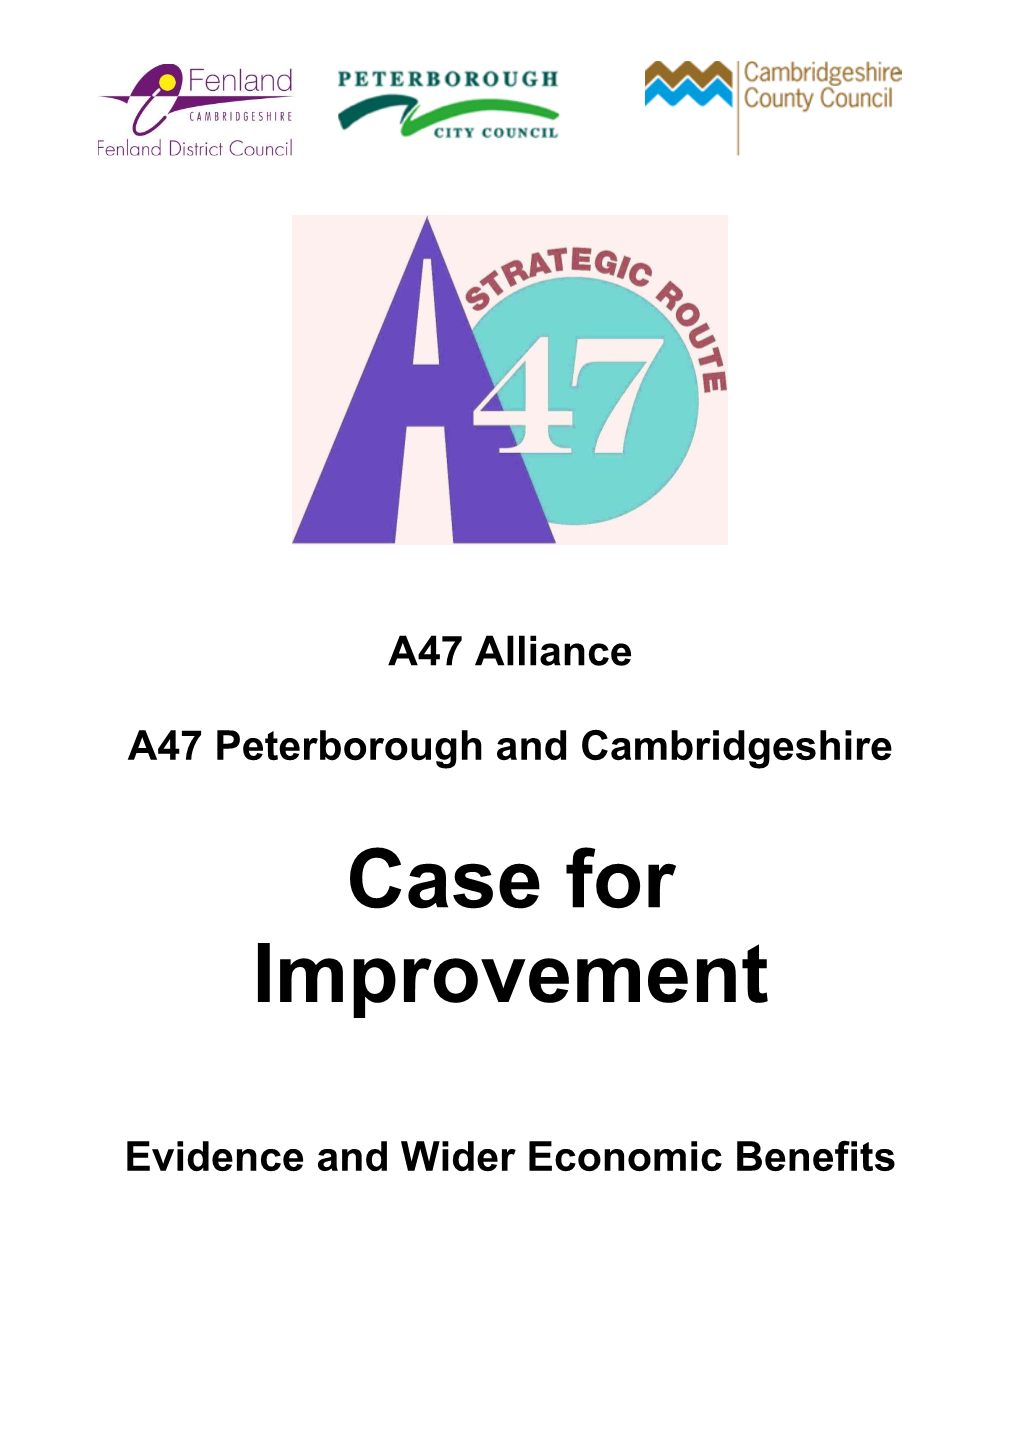 A47 Peterborough and Cambridgeshire Case for Improvement